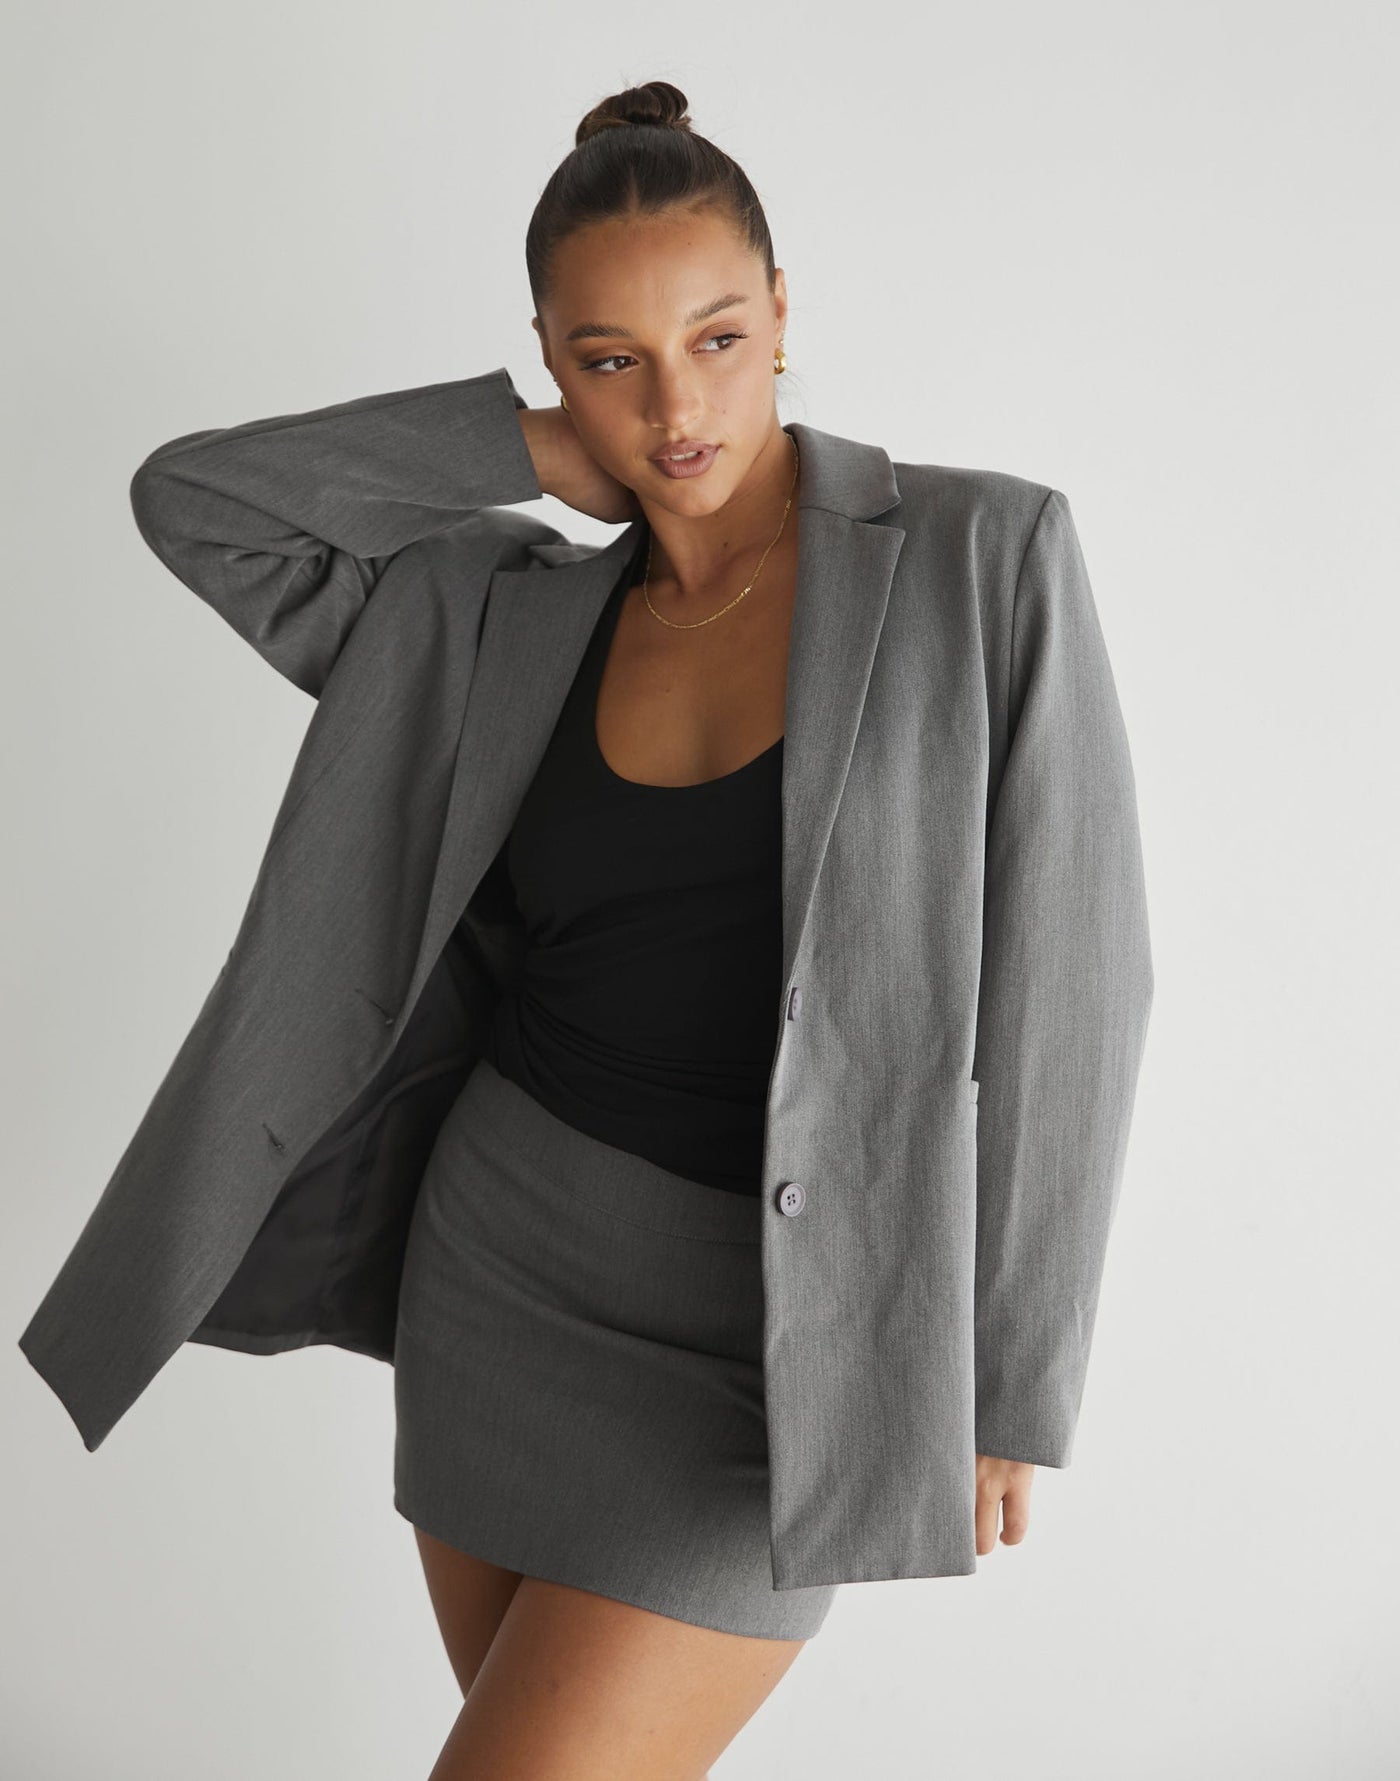 Ashwood Mini Skirt (Grey) - Mid-Rise Mini Skirt - Women's Skirt - Charcoal Clothing